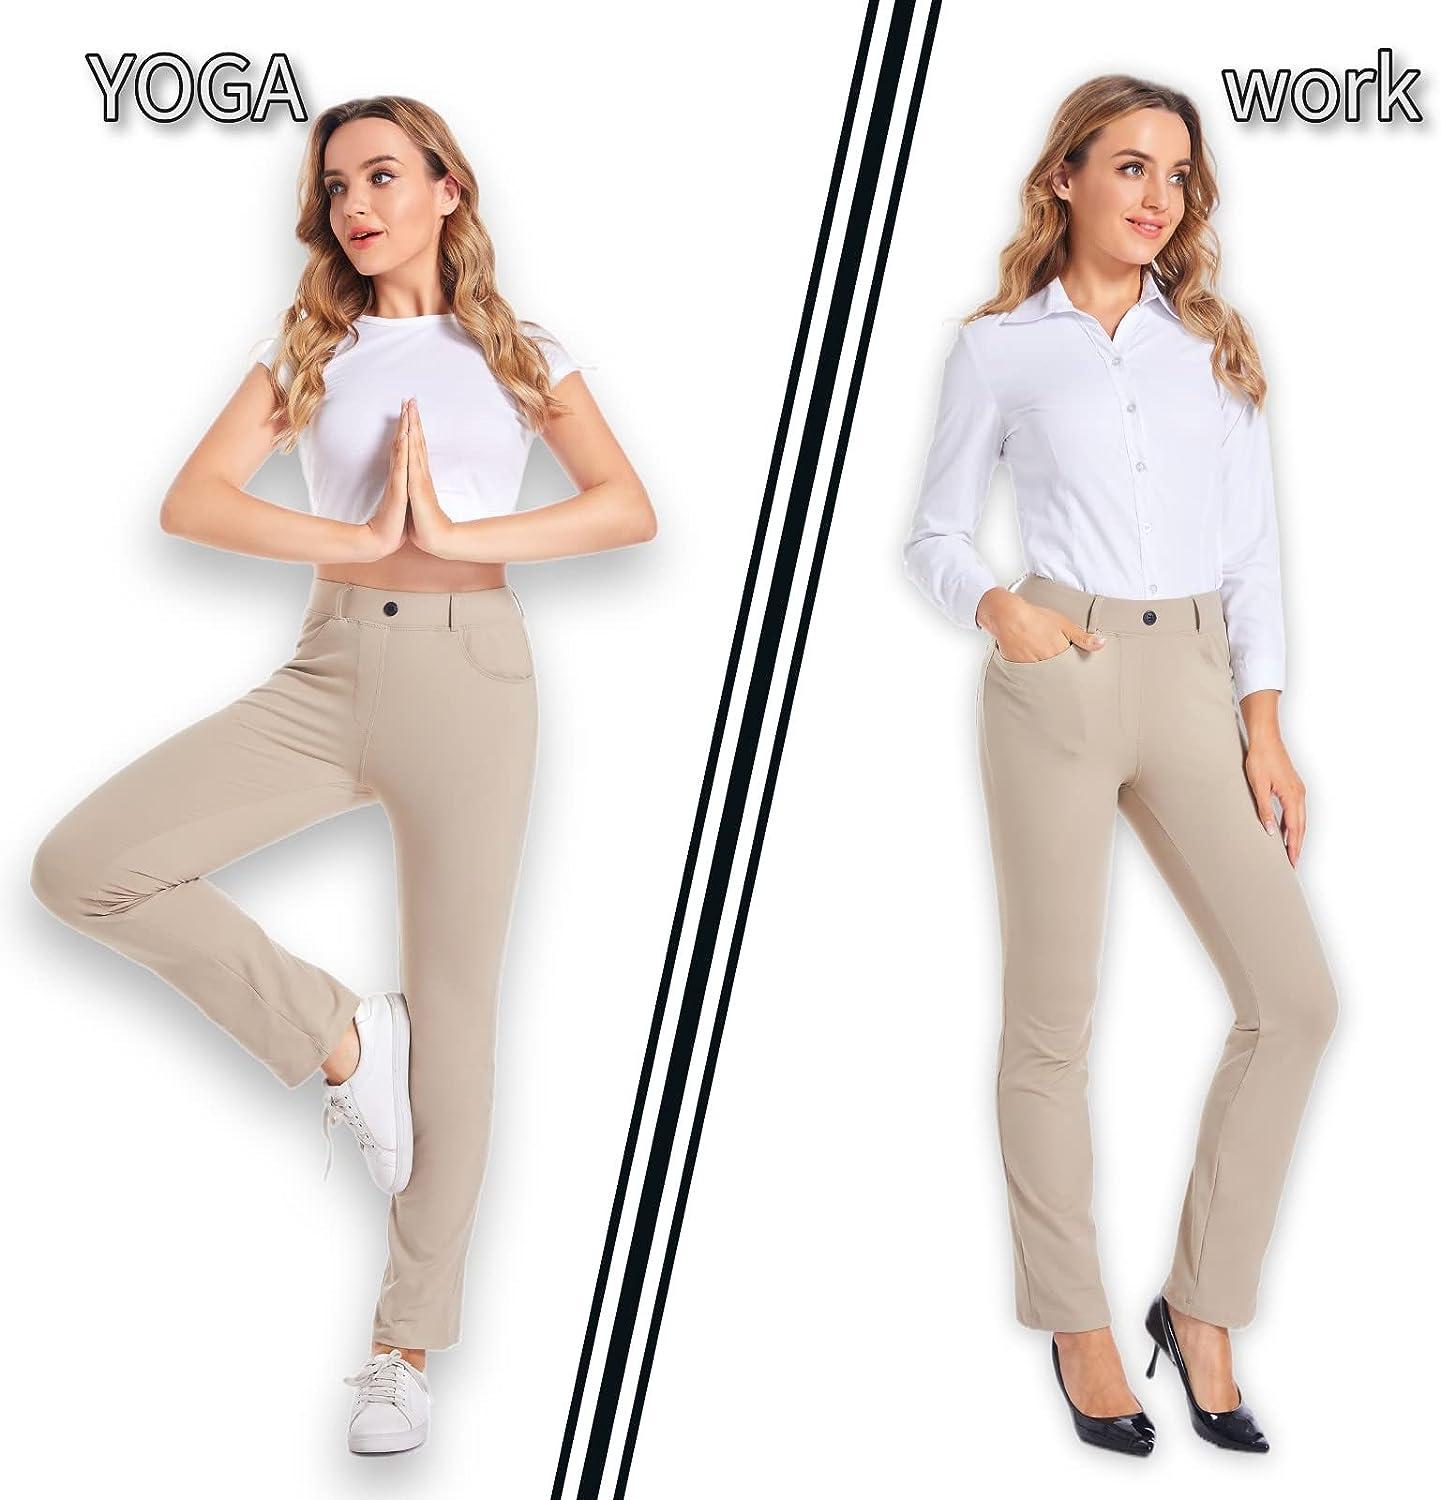 NICEWIN Women's Yoga Dress Pants with 4 Pockets, Petite Regular